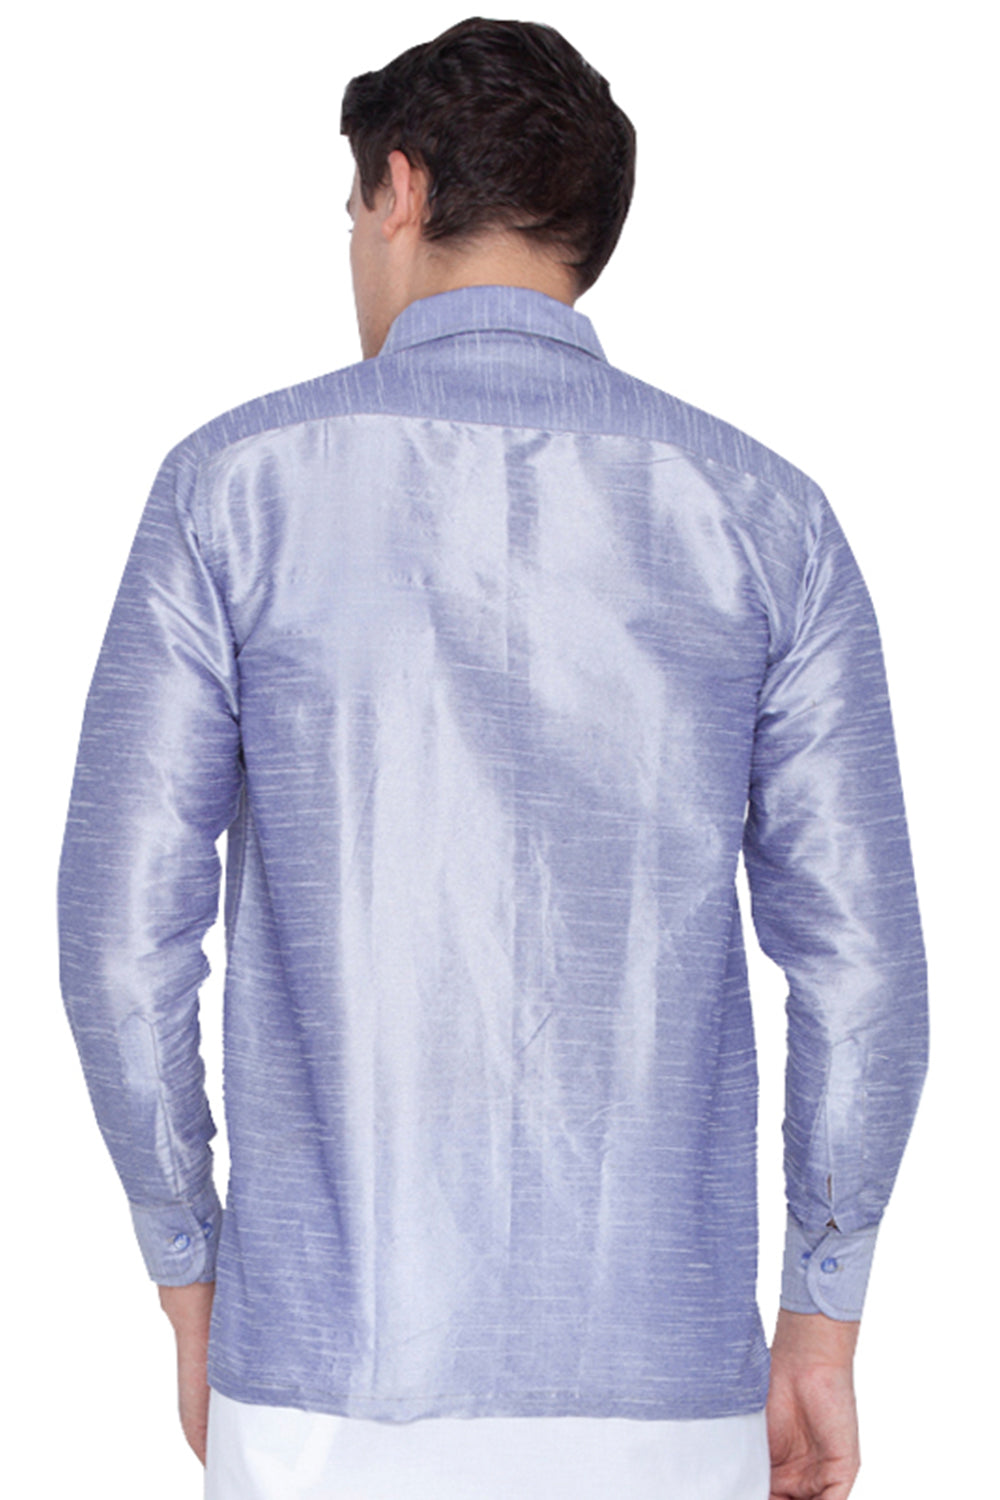 Silk Shirt - Buy Silk Shirt online in India